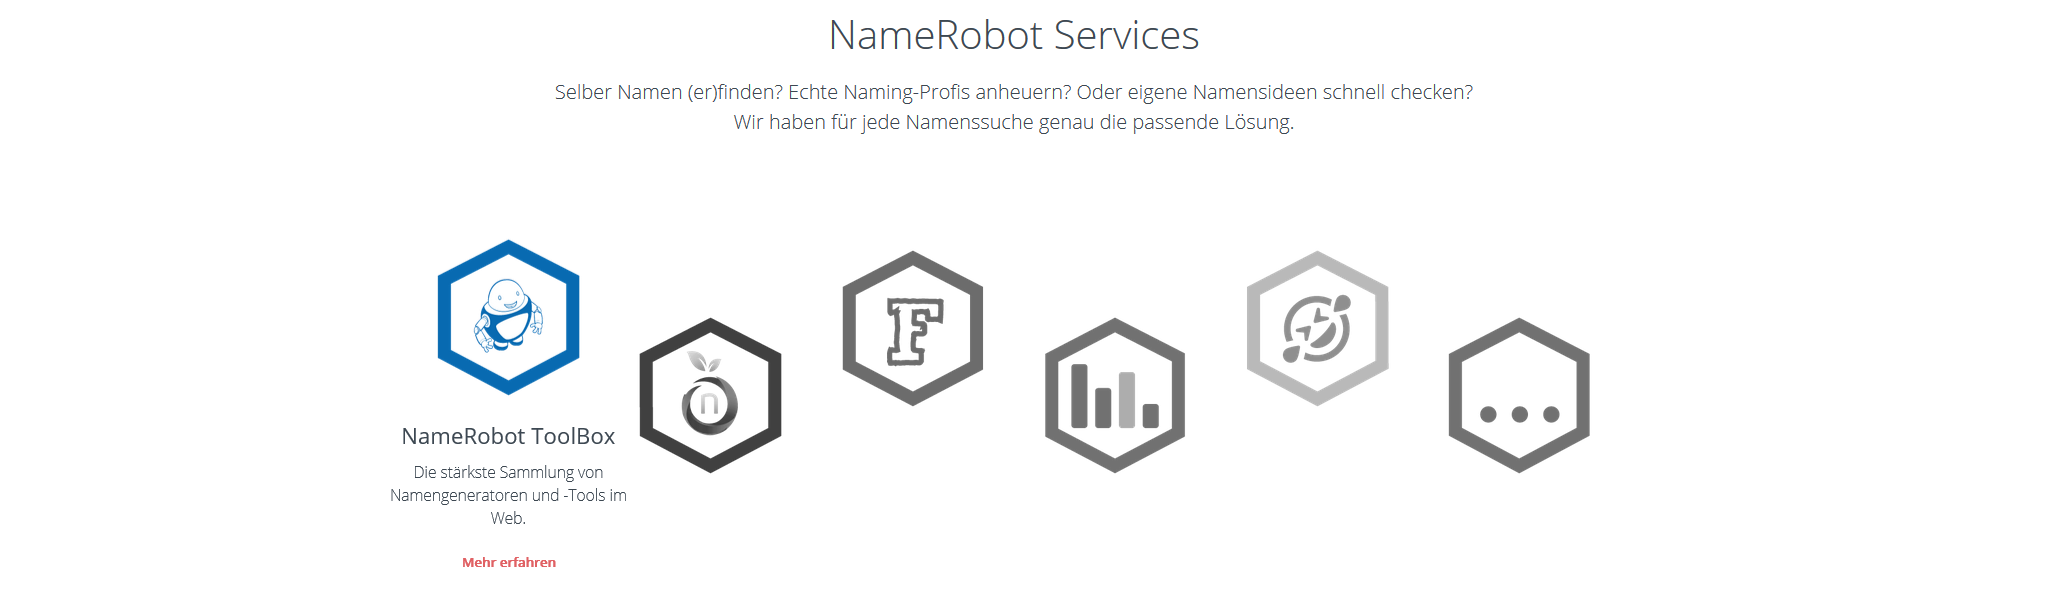 namerobot-relaunch1